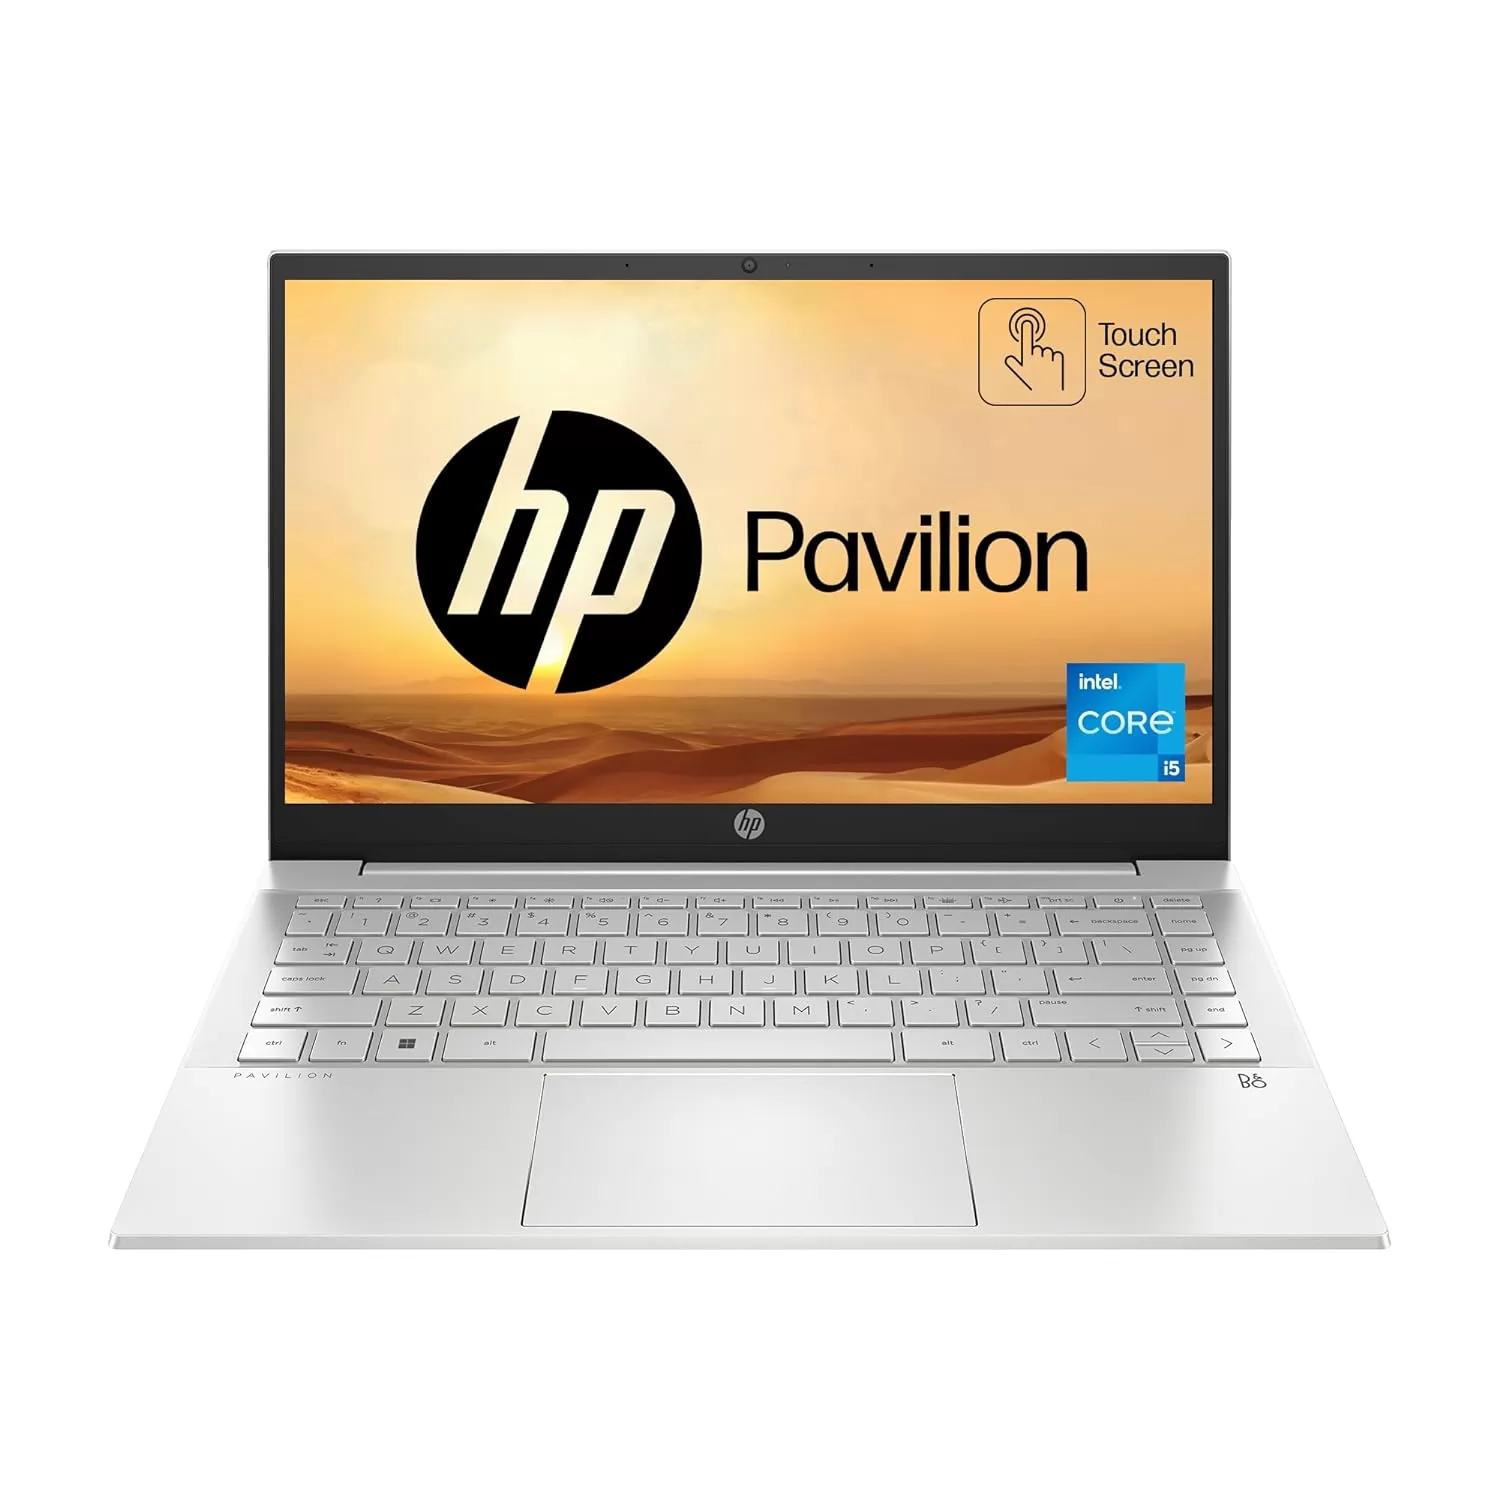 HP Pavilion 14, 12th Gen Intel Core i5-1235U